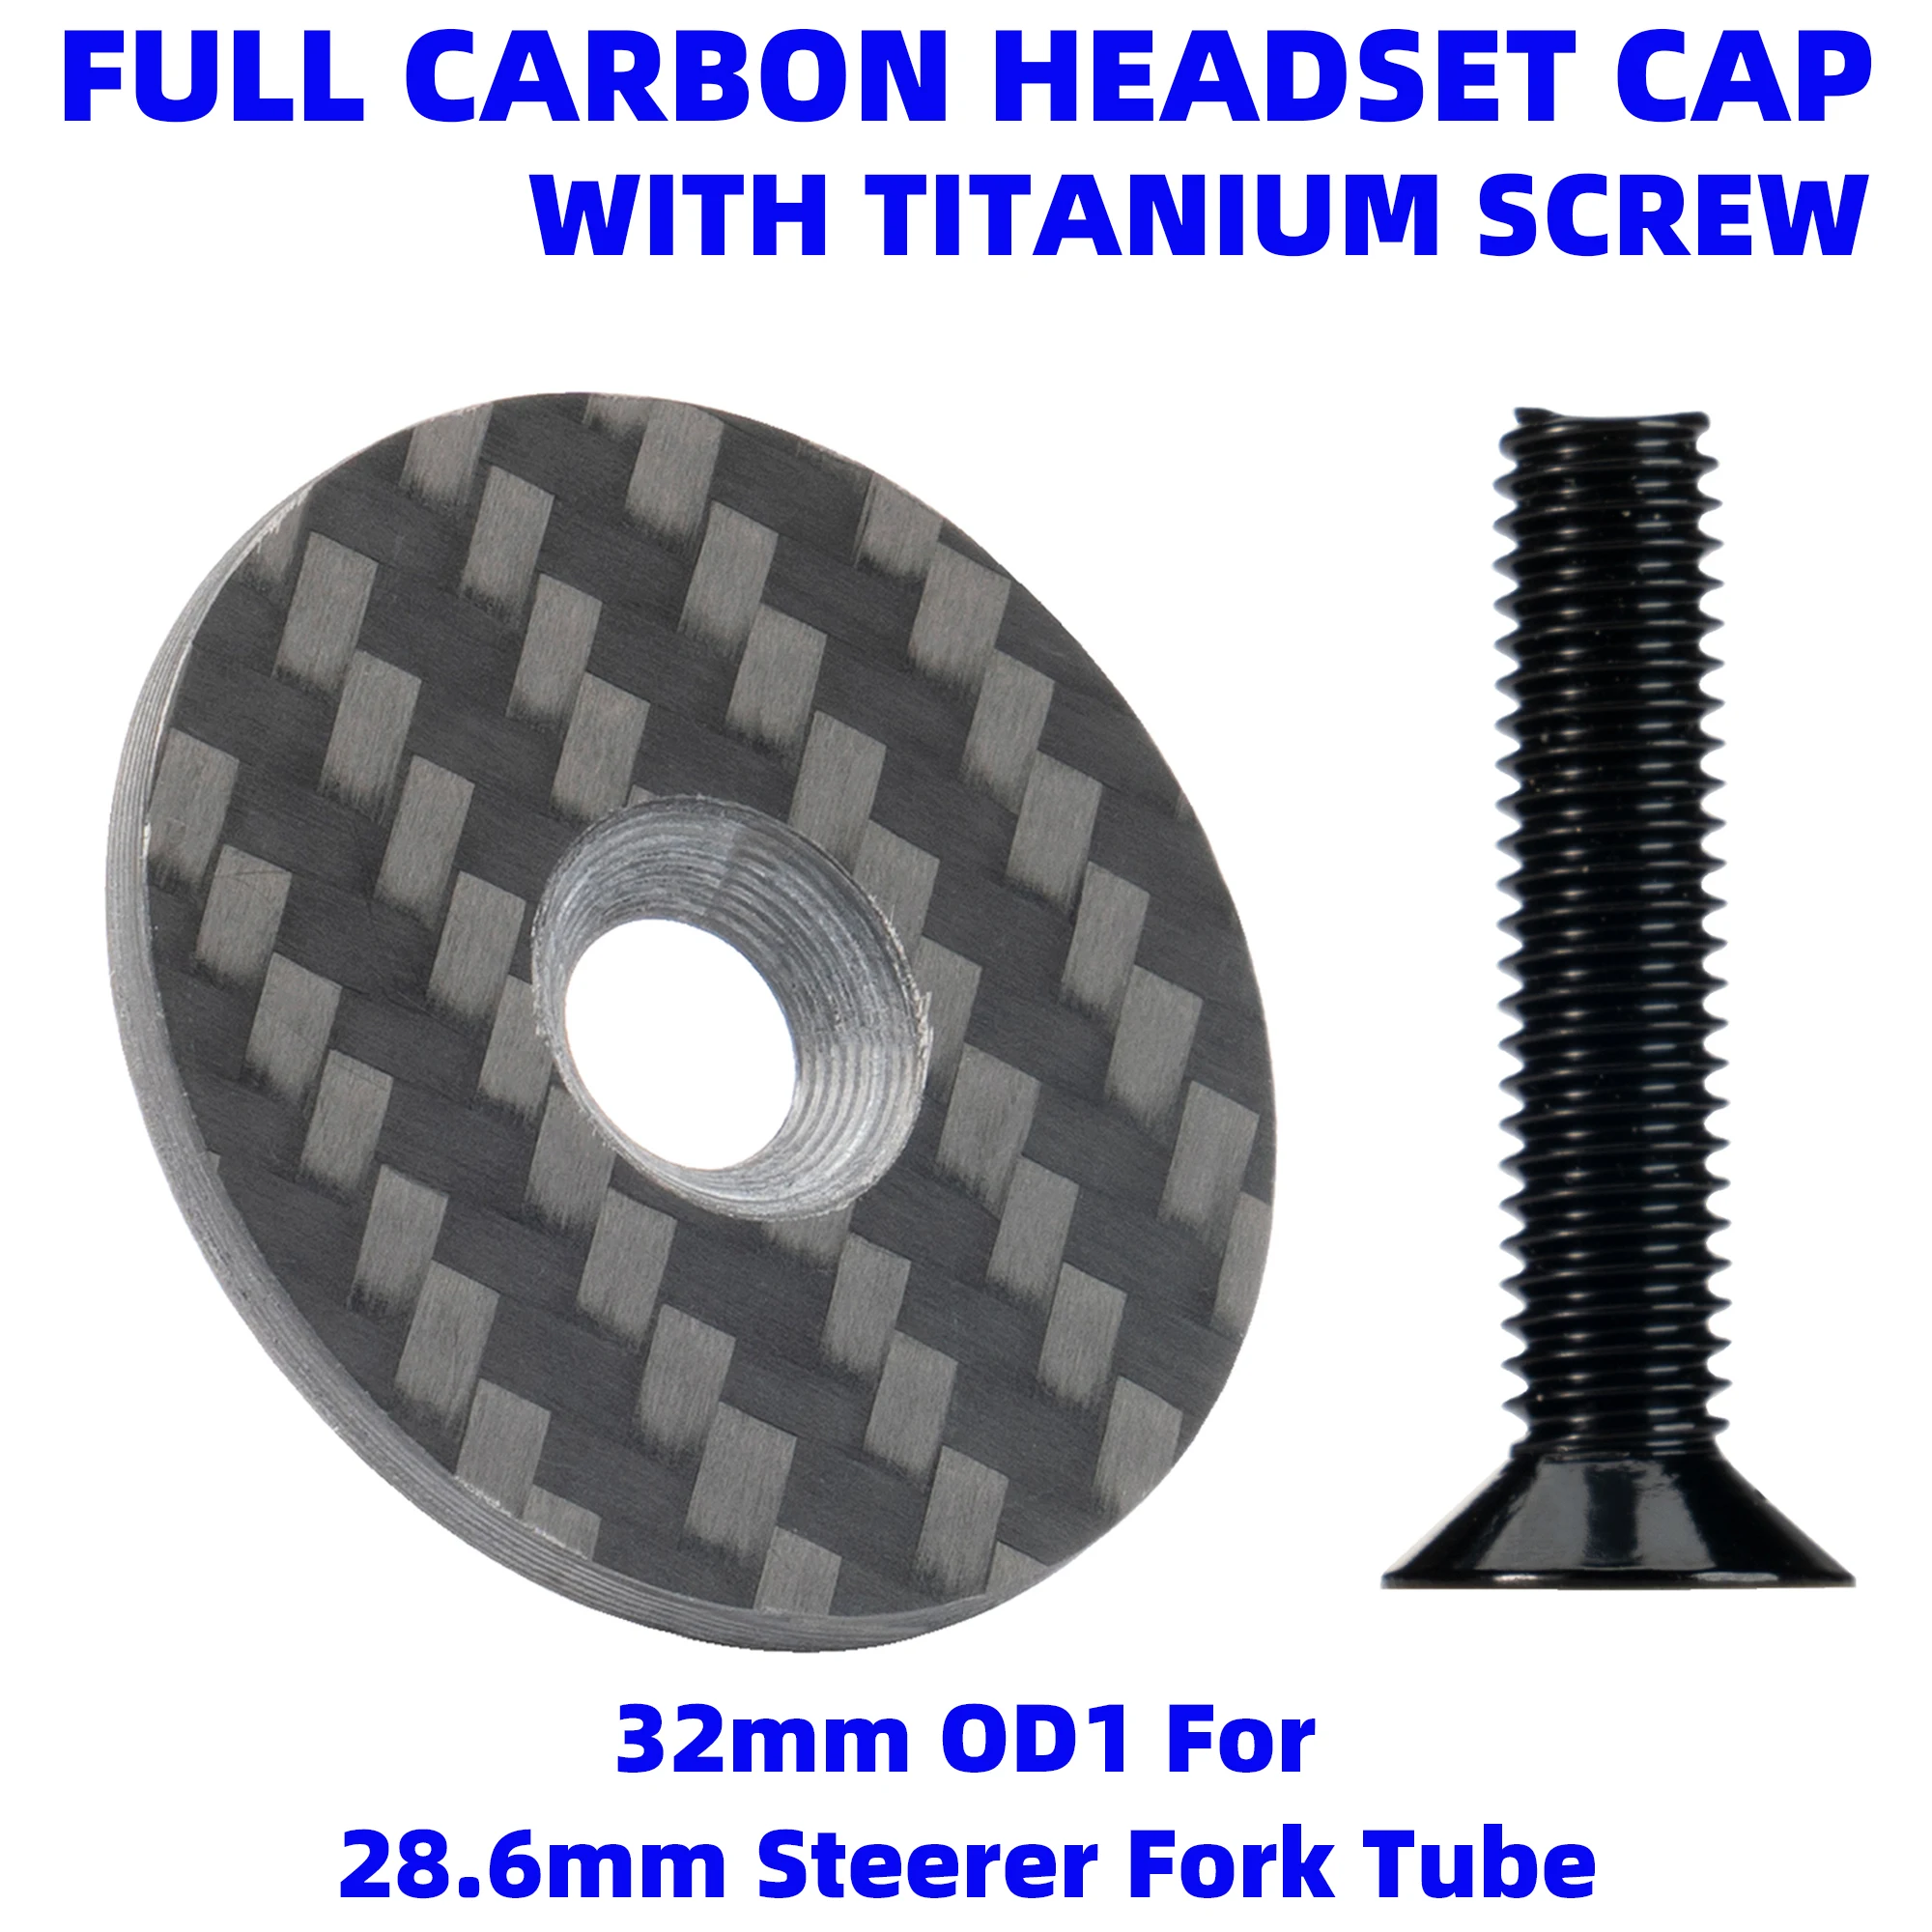 Bicycle Headset carbon top Cap Carbon Fiber Bike Stem 28.6mm 1 1/8" Steerer Fork Tube Headset Cap Cover